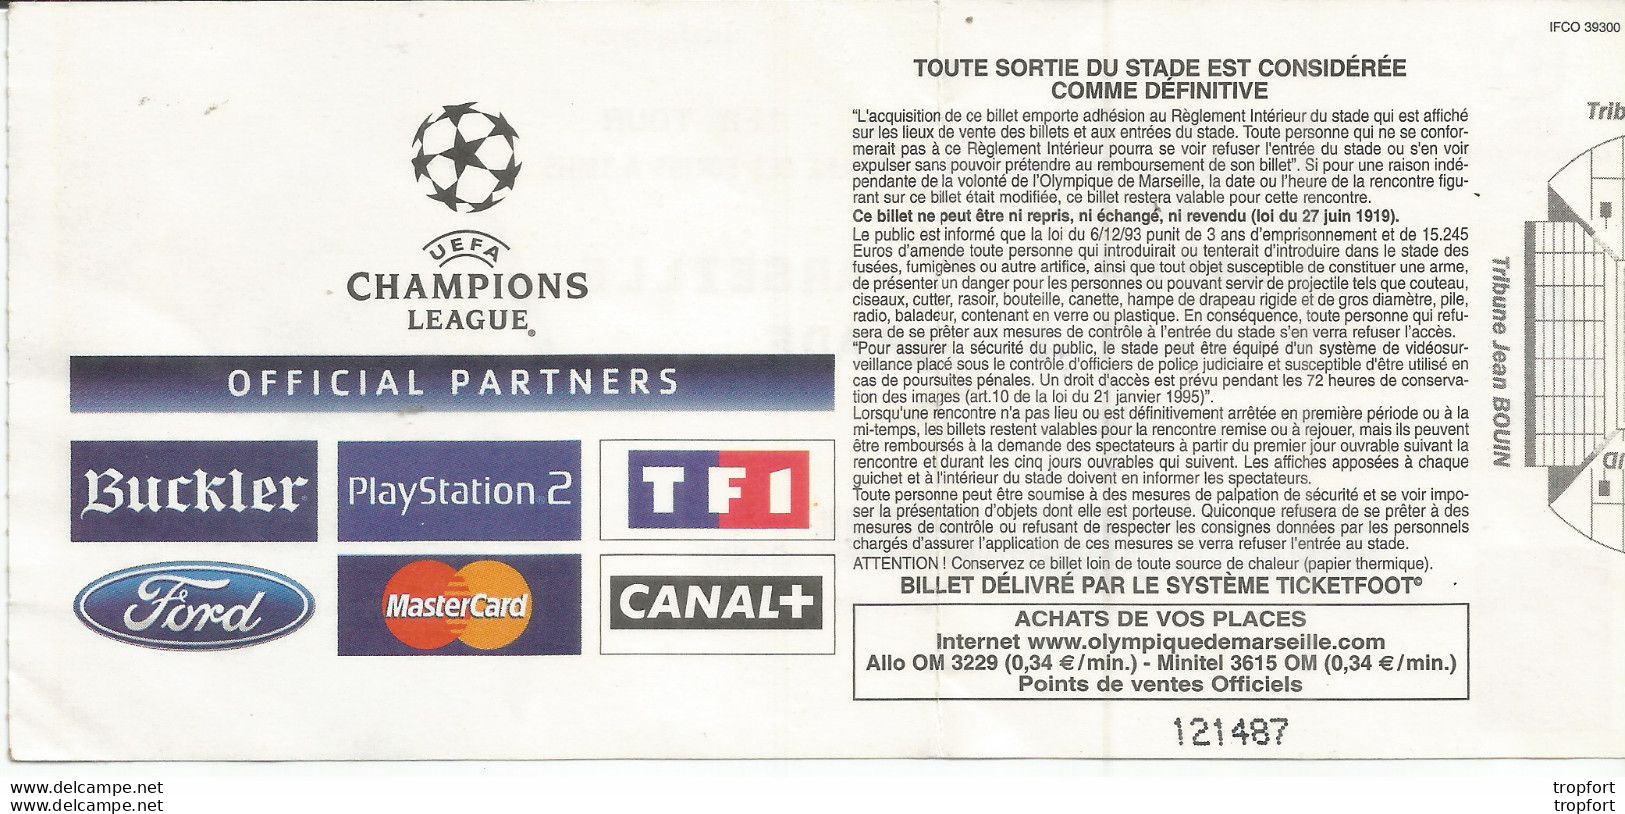 CG1 / / TICKET FOOTBALL Olympique De MARSEILLE 2003 Partizan De BELGRADE VELODROME UEFA - Tickets D'entrée